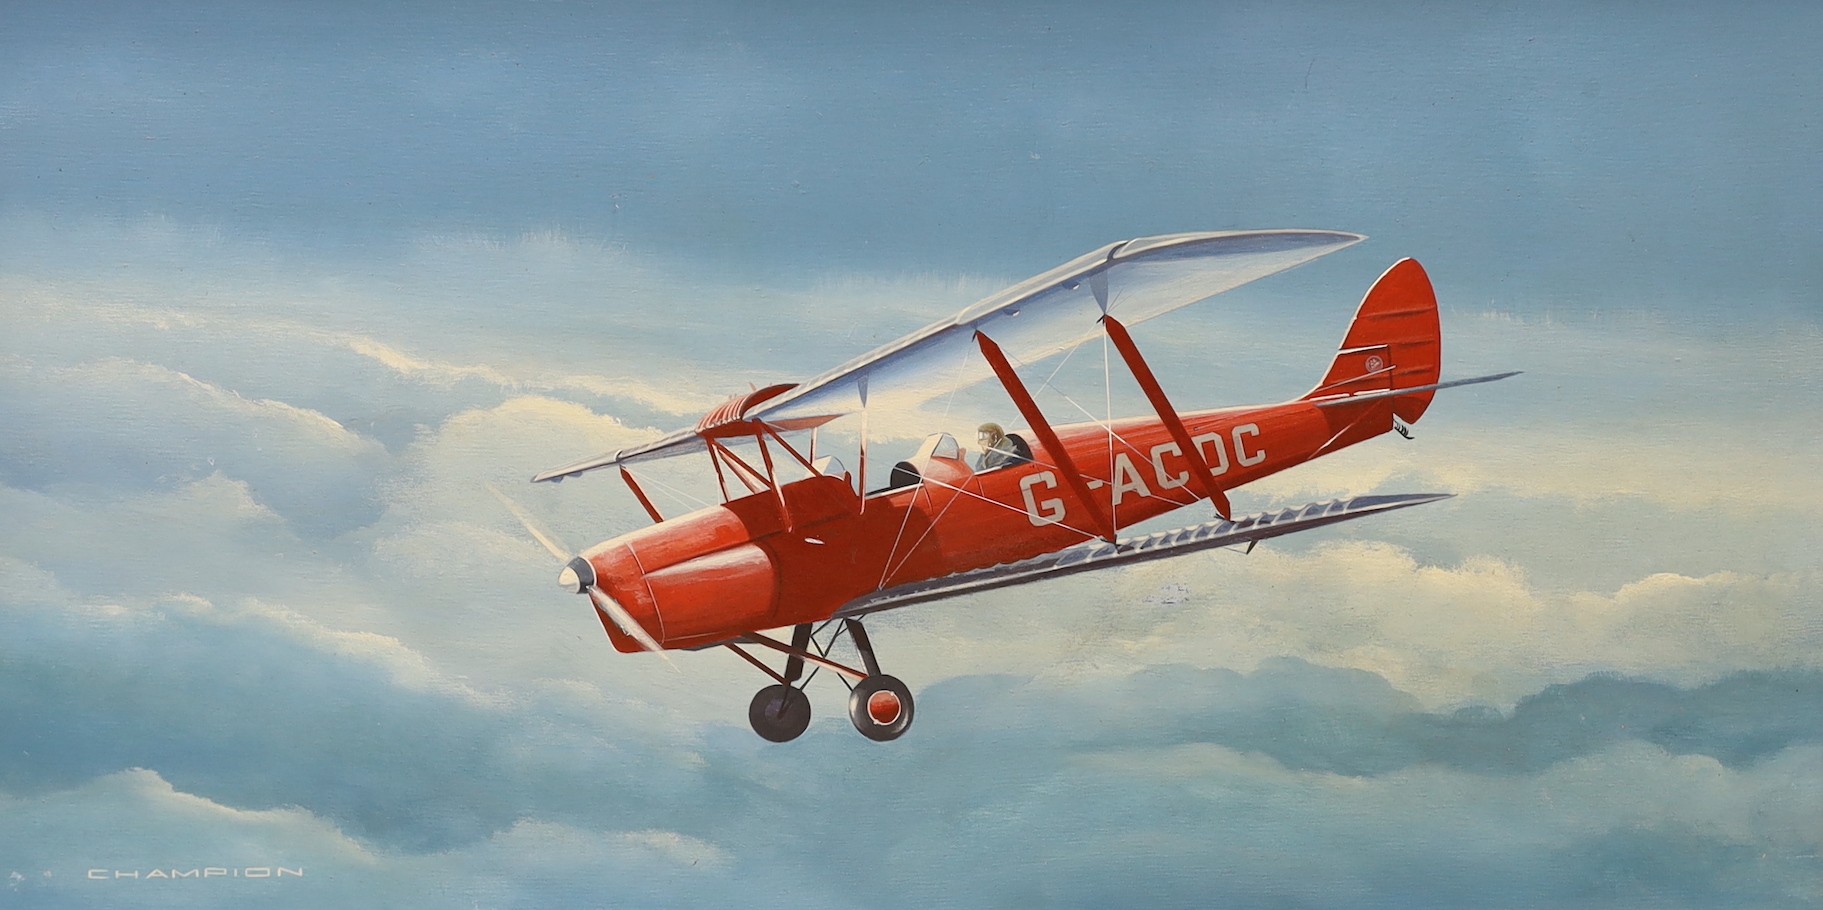 Peter Champion, oil on board, Bi-plane in flight, signed, 40 x 75cm